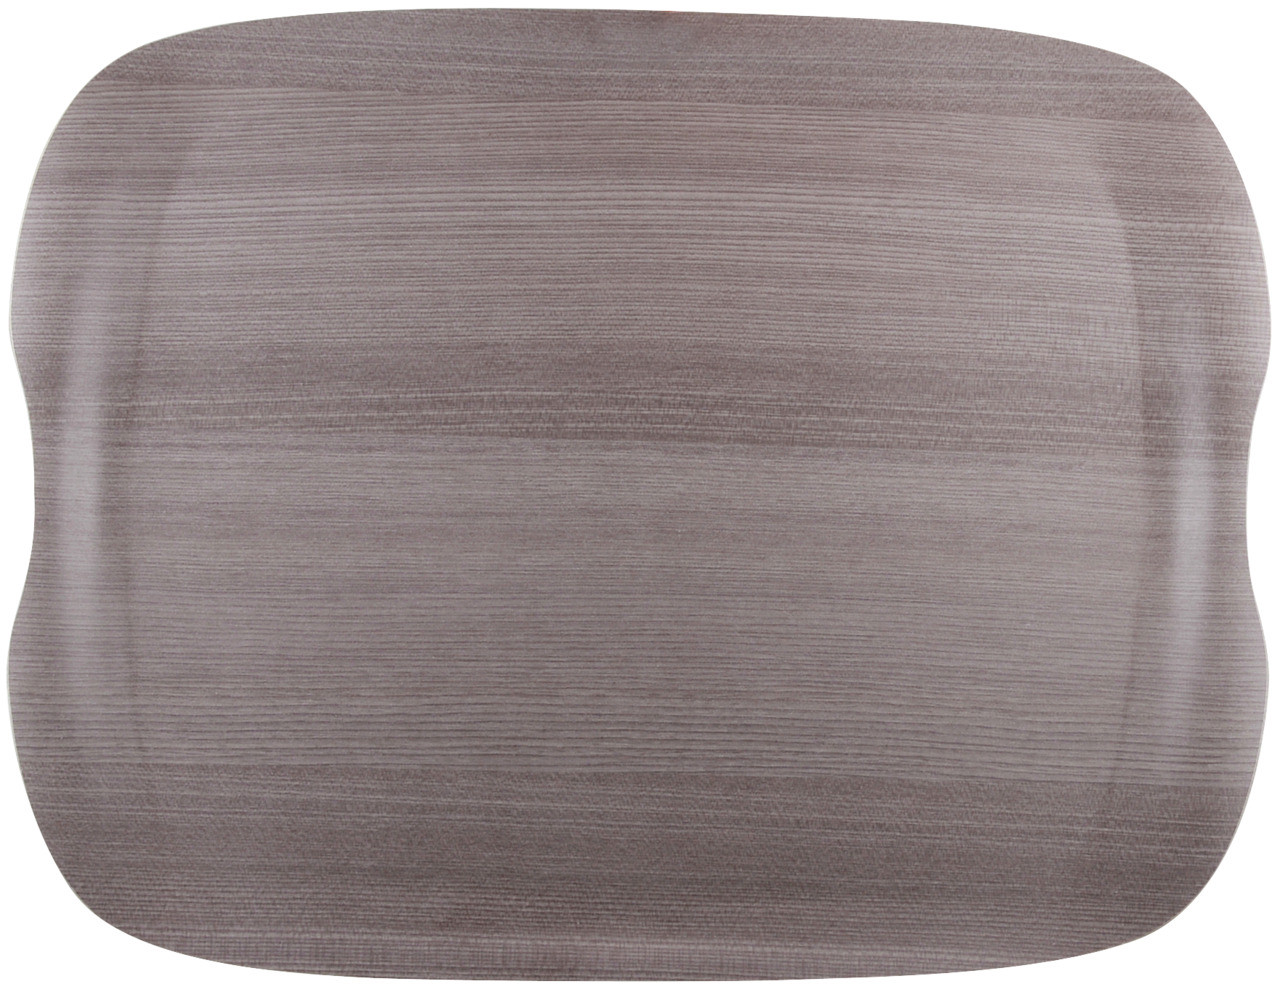 Tablett Wave 420 x 320 mm grey Wood